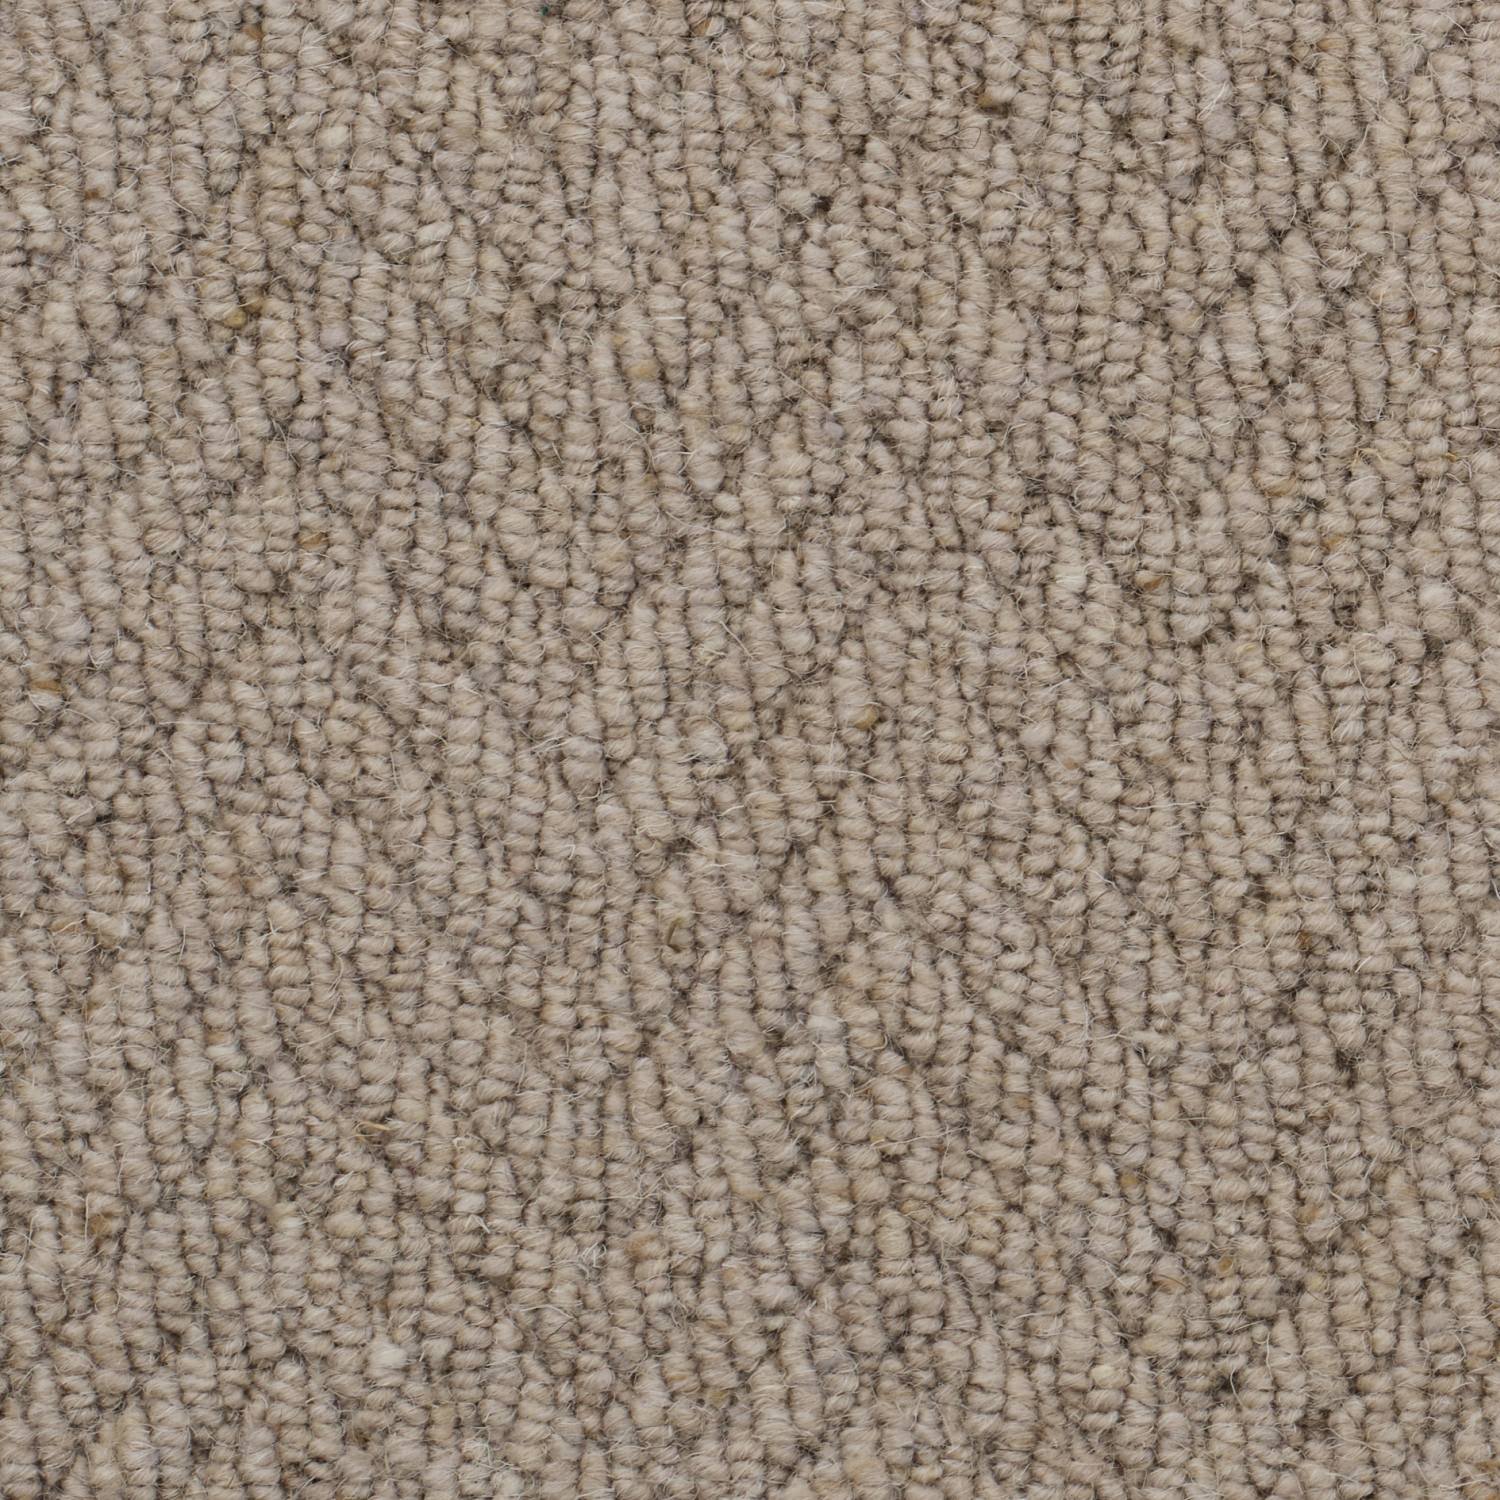 Natural Origins Loop Wool Carpet - Hardwick Herringbone